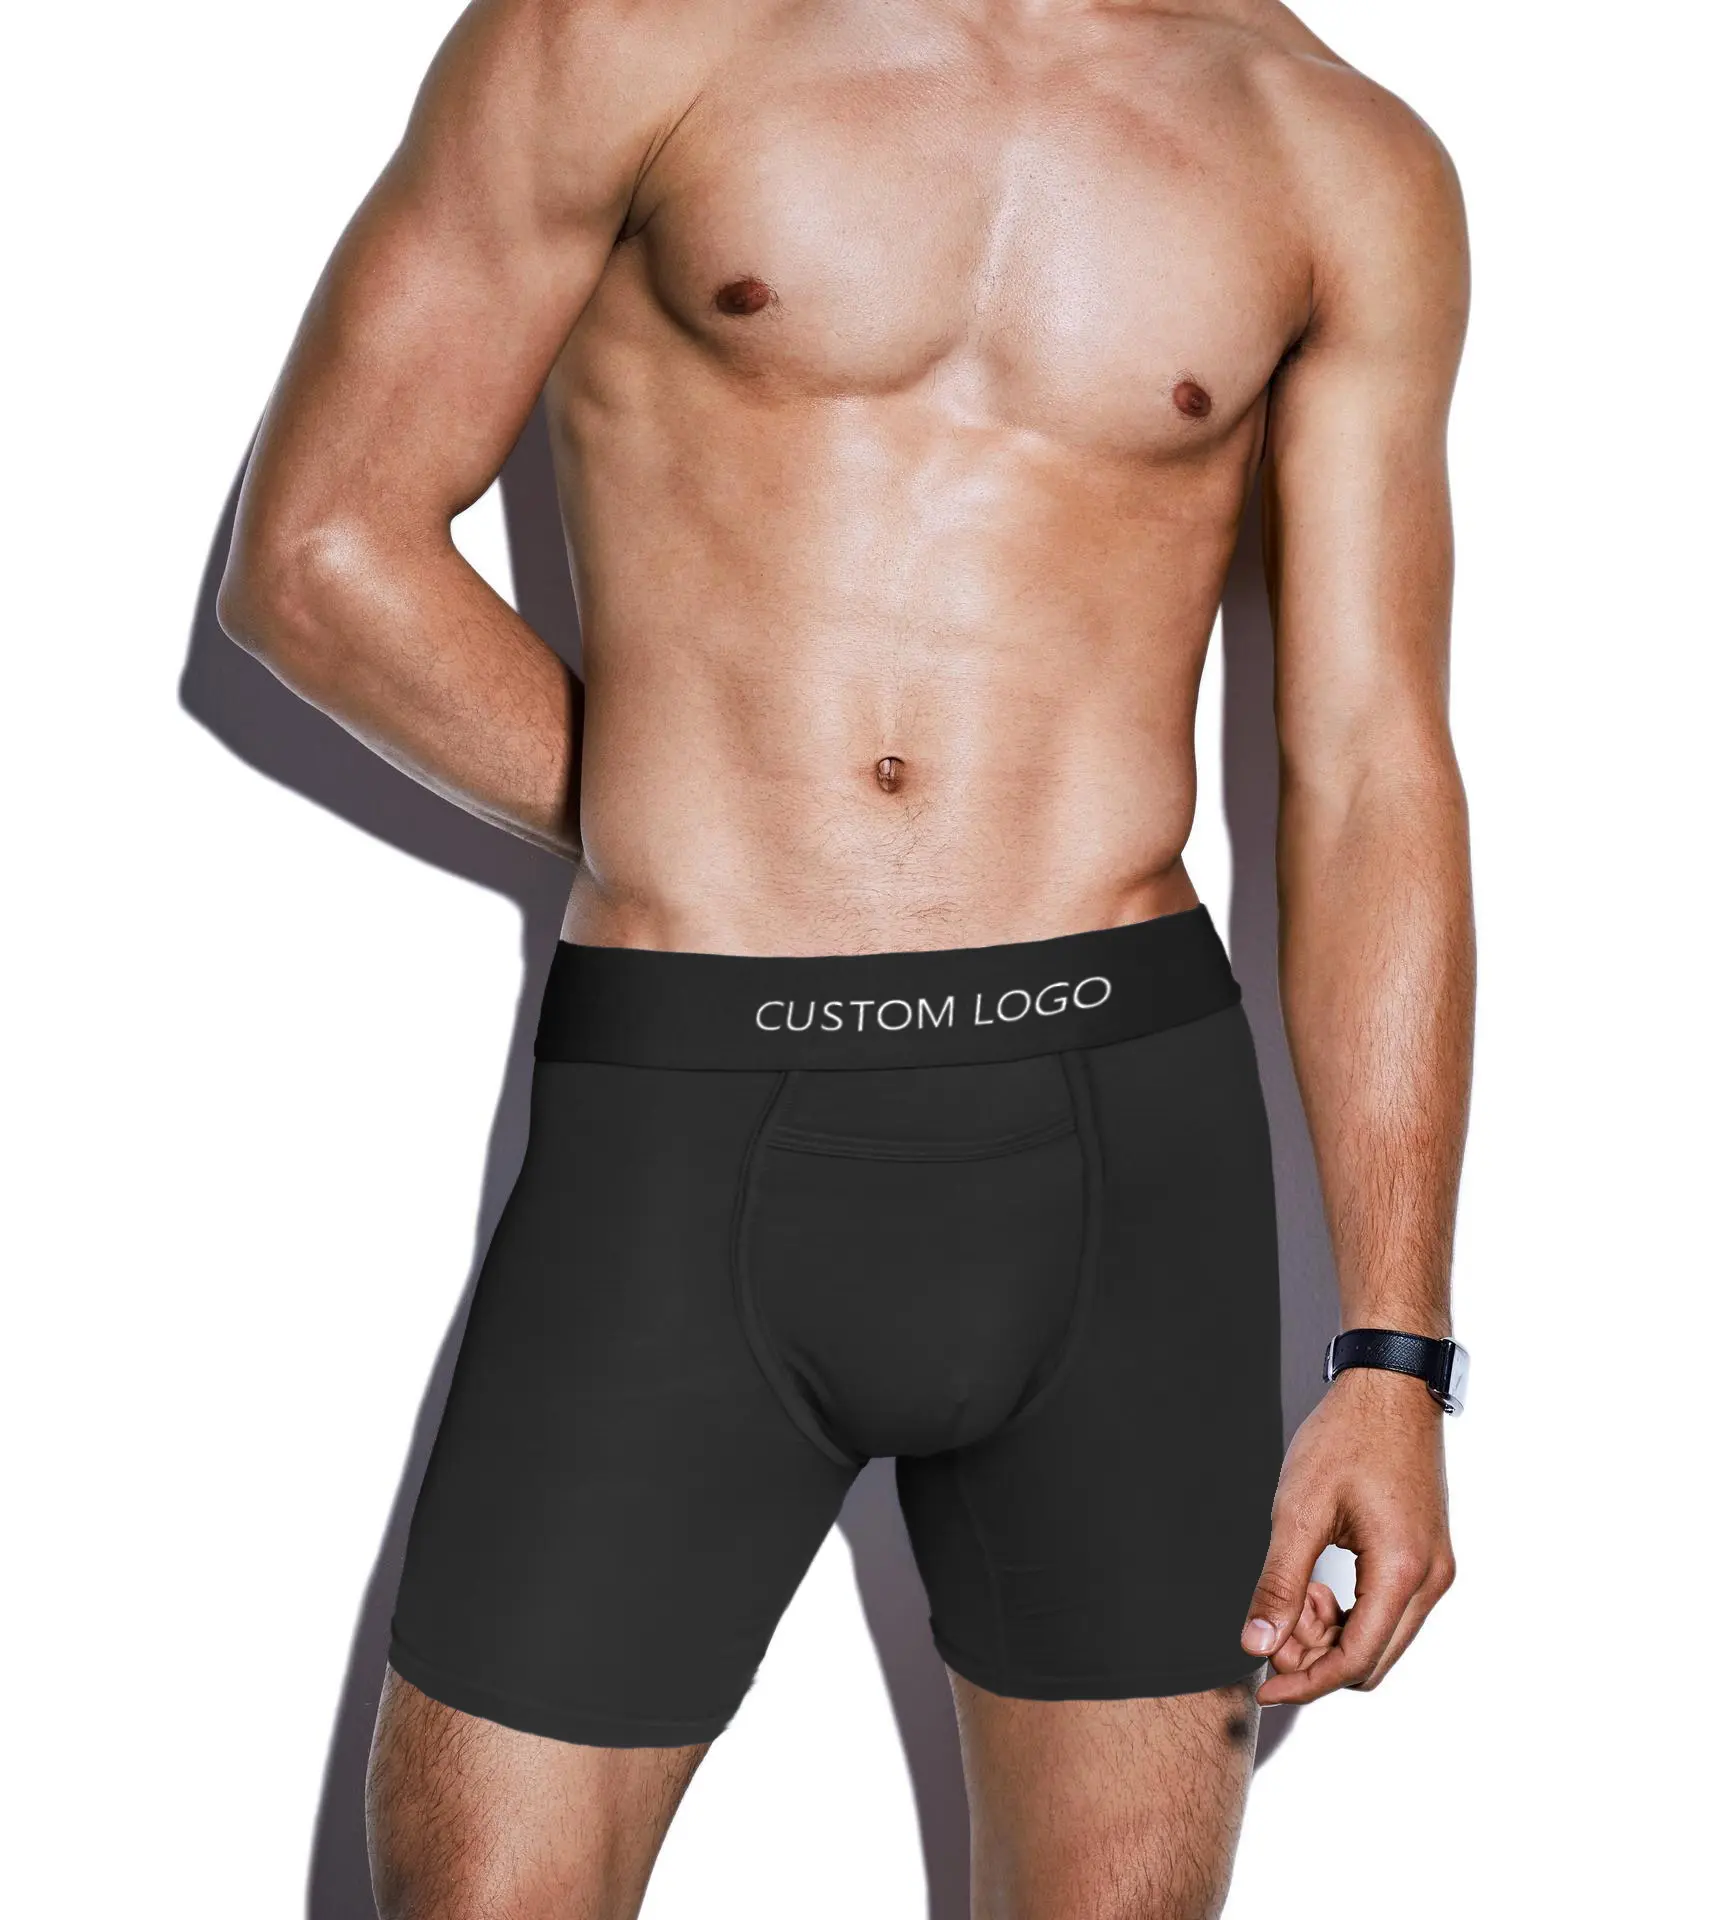 Wholesale And OEM Men's Modal Sports Underwear Boxer Briefs Breathable Gym Wear Short For Men